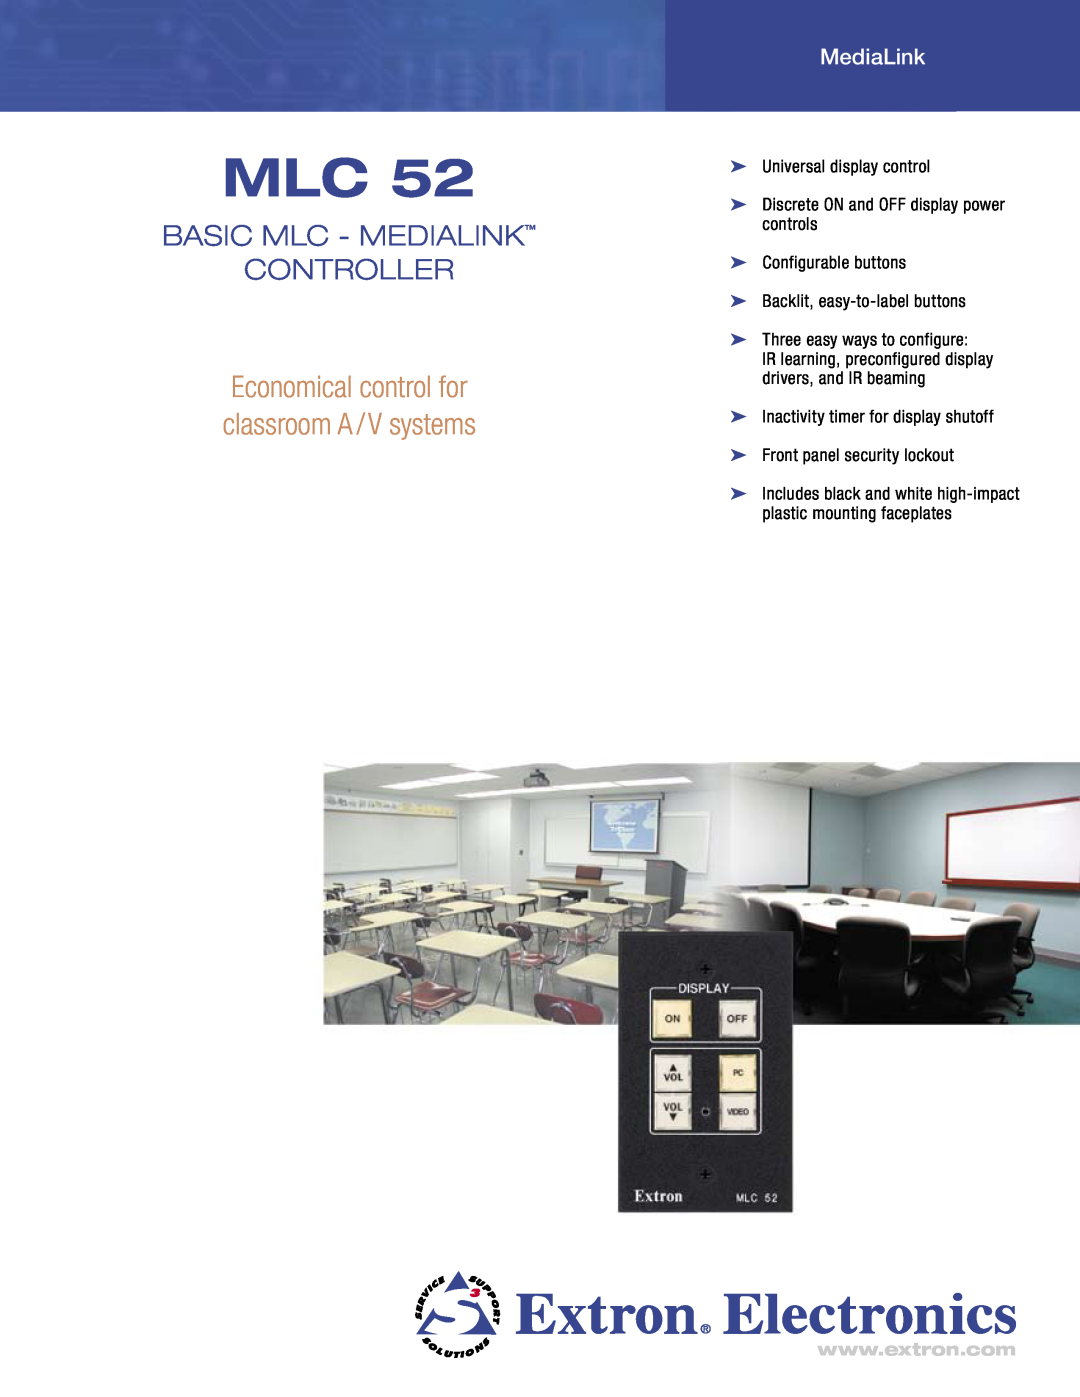 Extron electronic MLC 52 IR manual basic mlc - Medialink Controller, Economical control for classroom A / V systems 